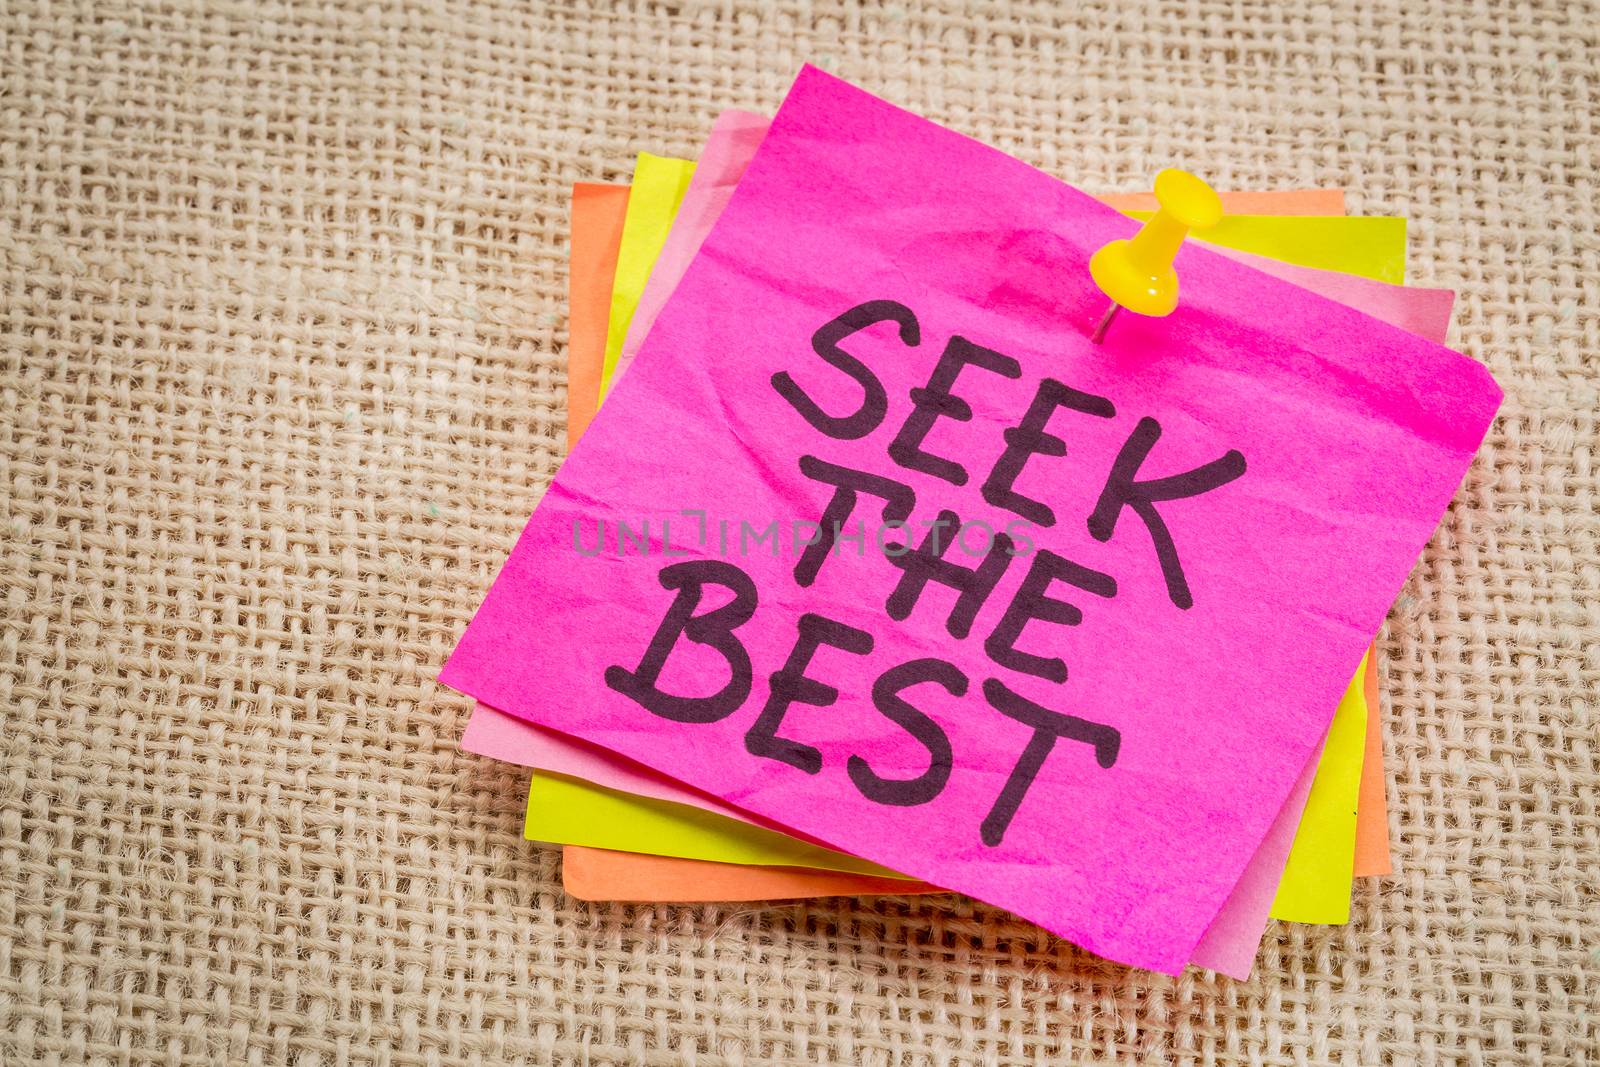 seek the best - motivational reminder on a purple sticky note